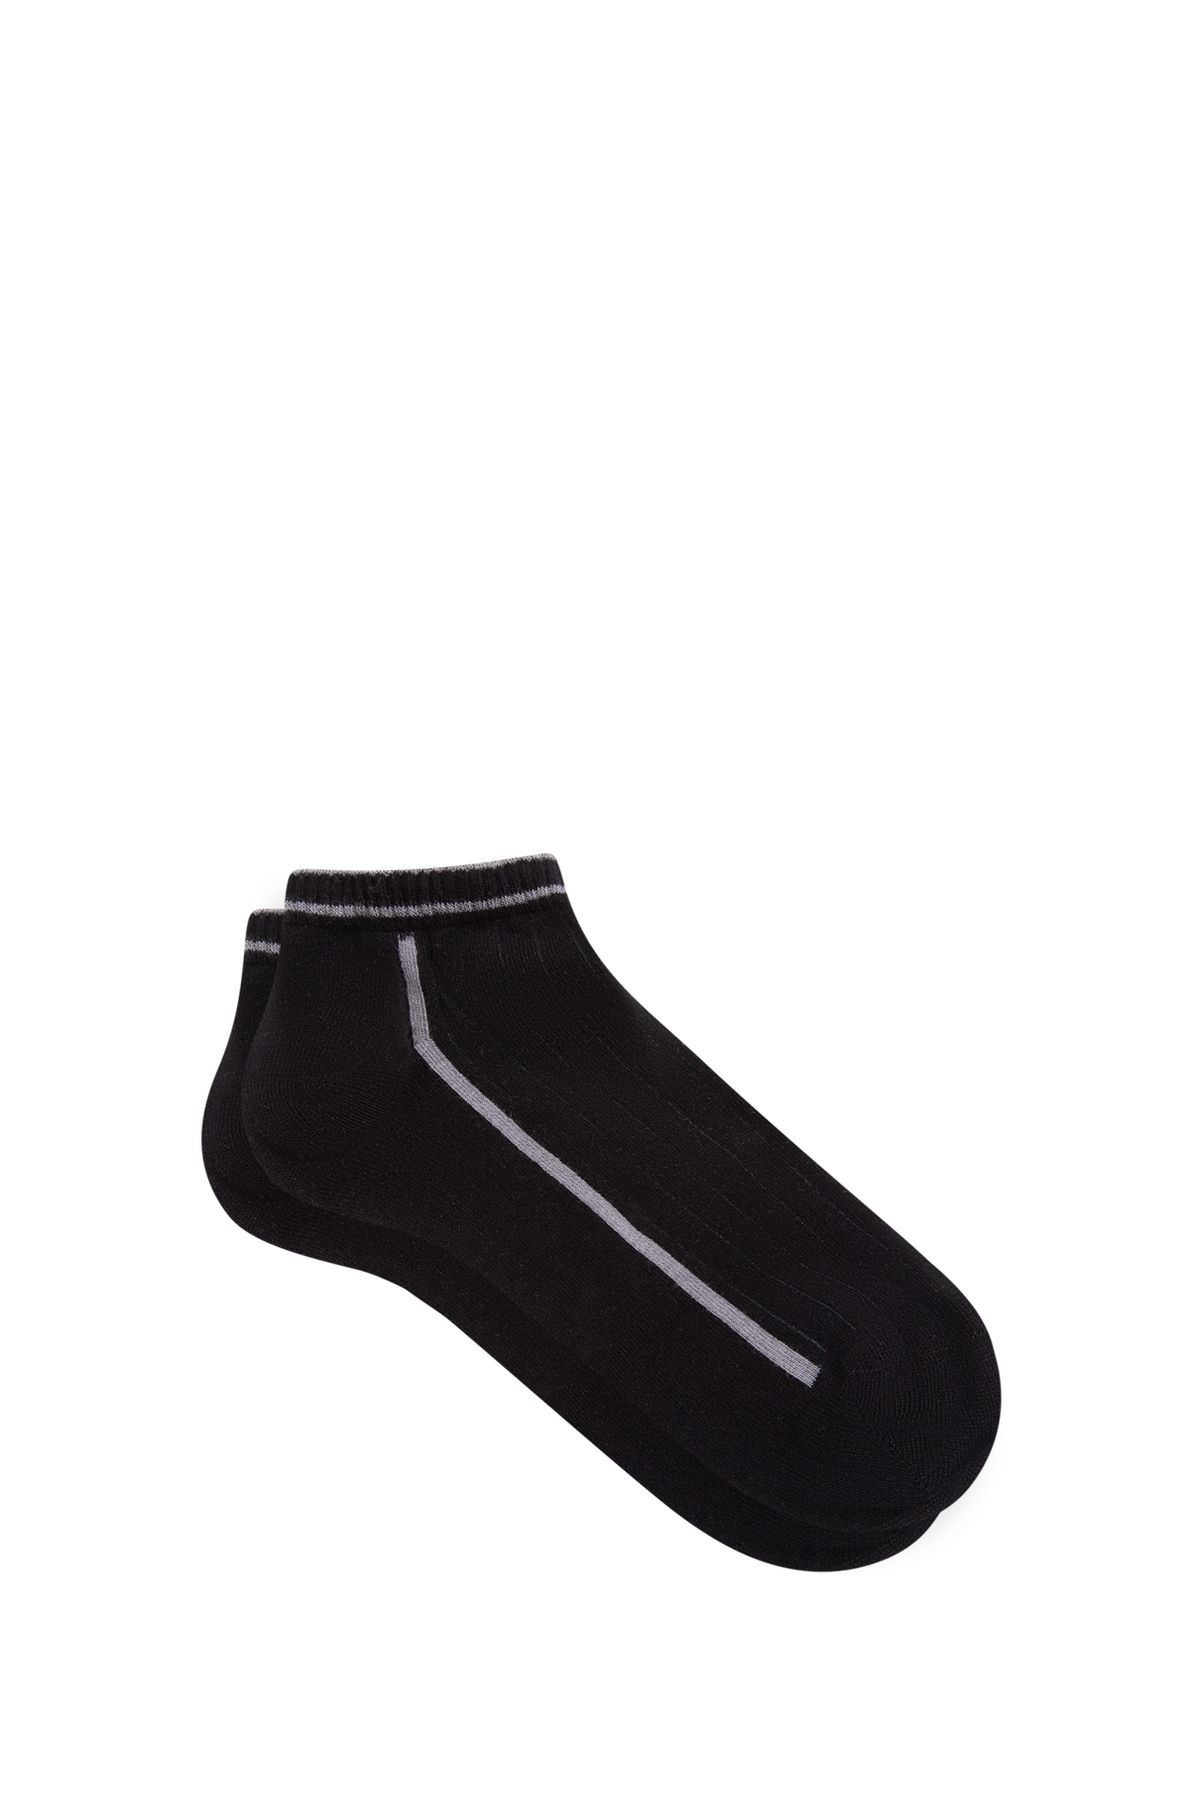 Mavi Siyah Patik Çorap 0910520-900